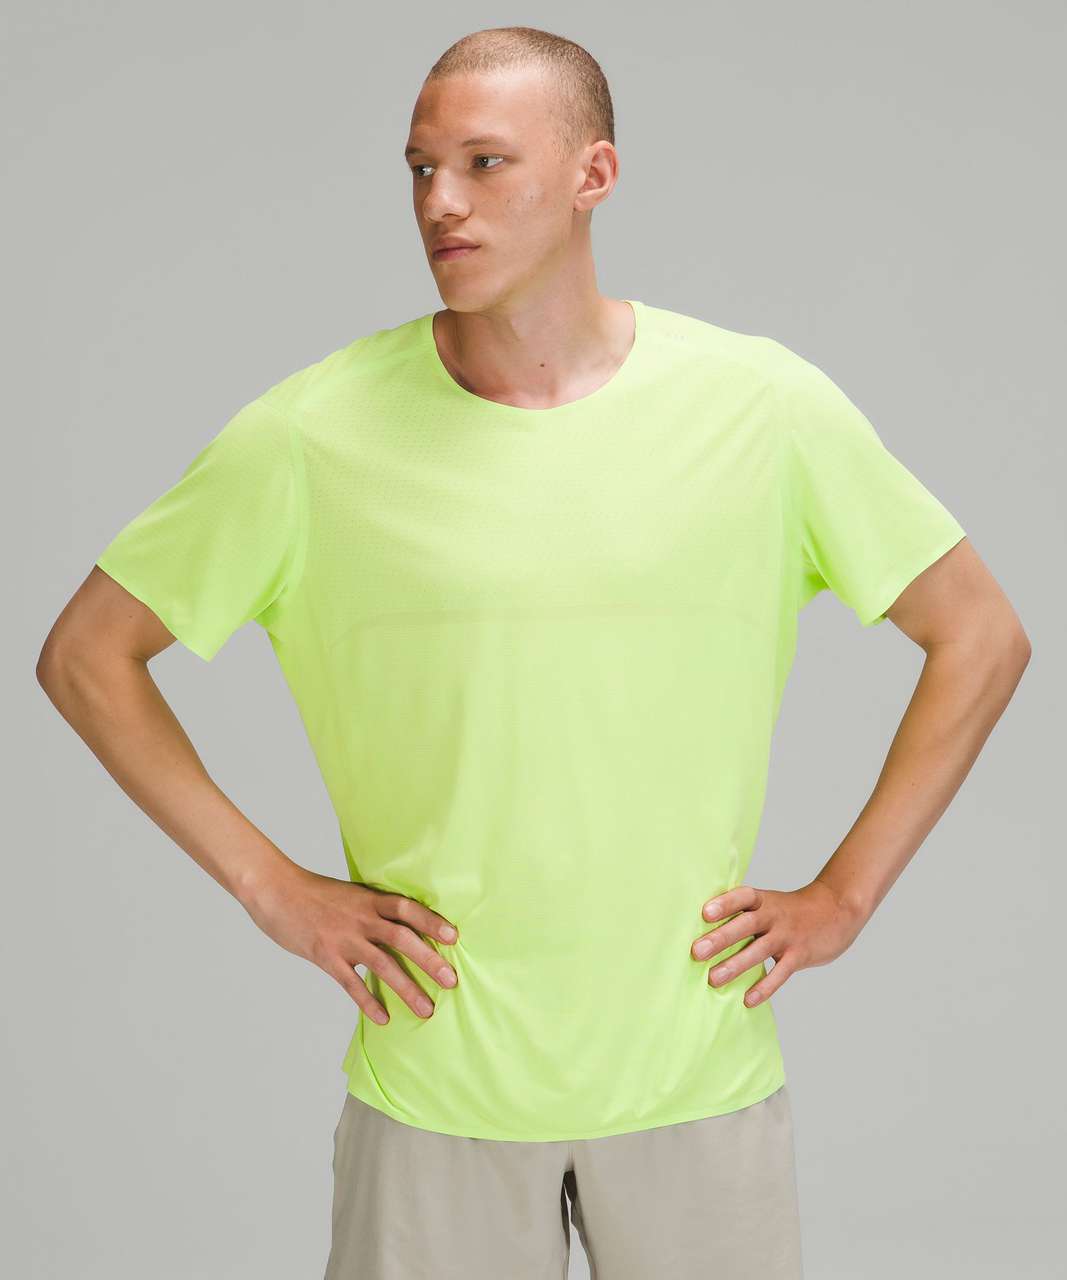 Lululemon Fast and Free Short Sleeve Shirt - Neo Mint